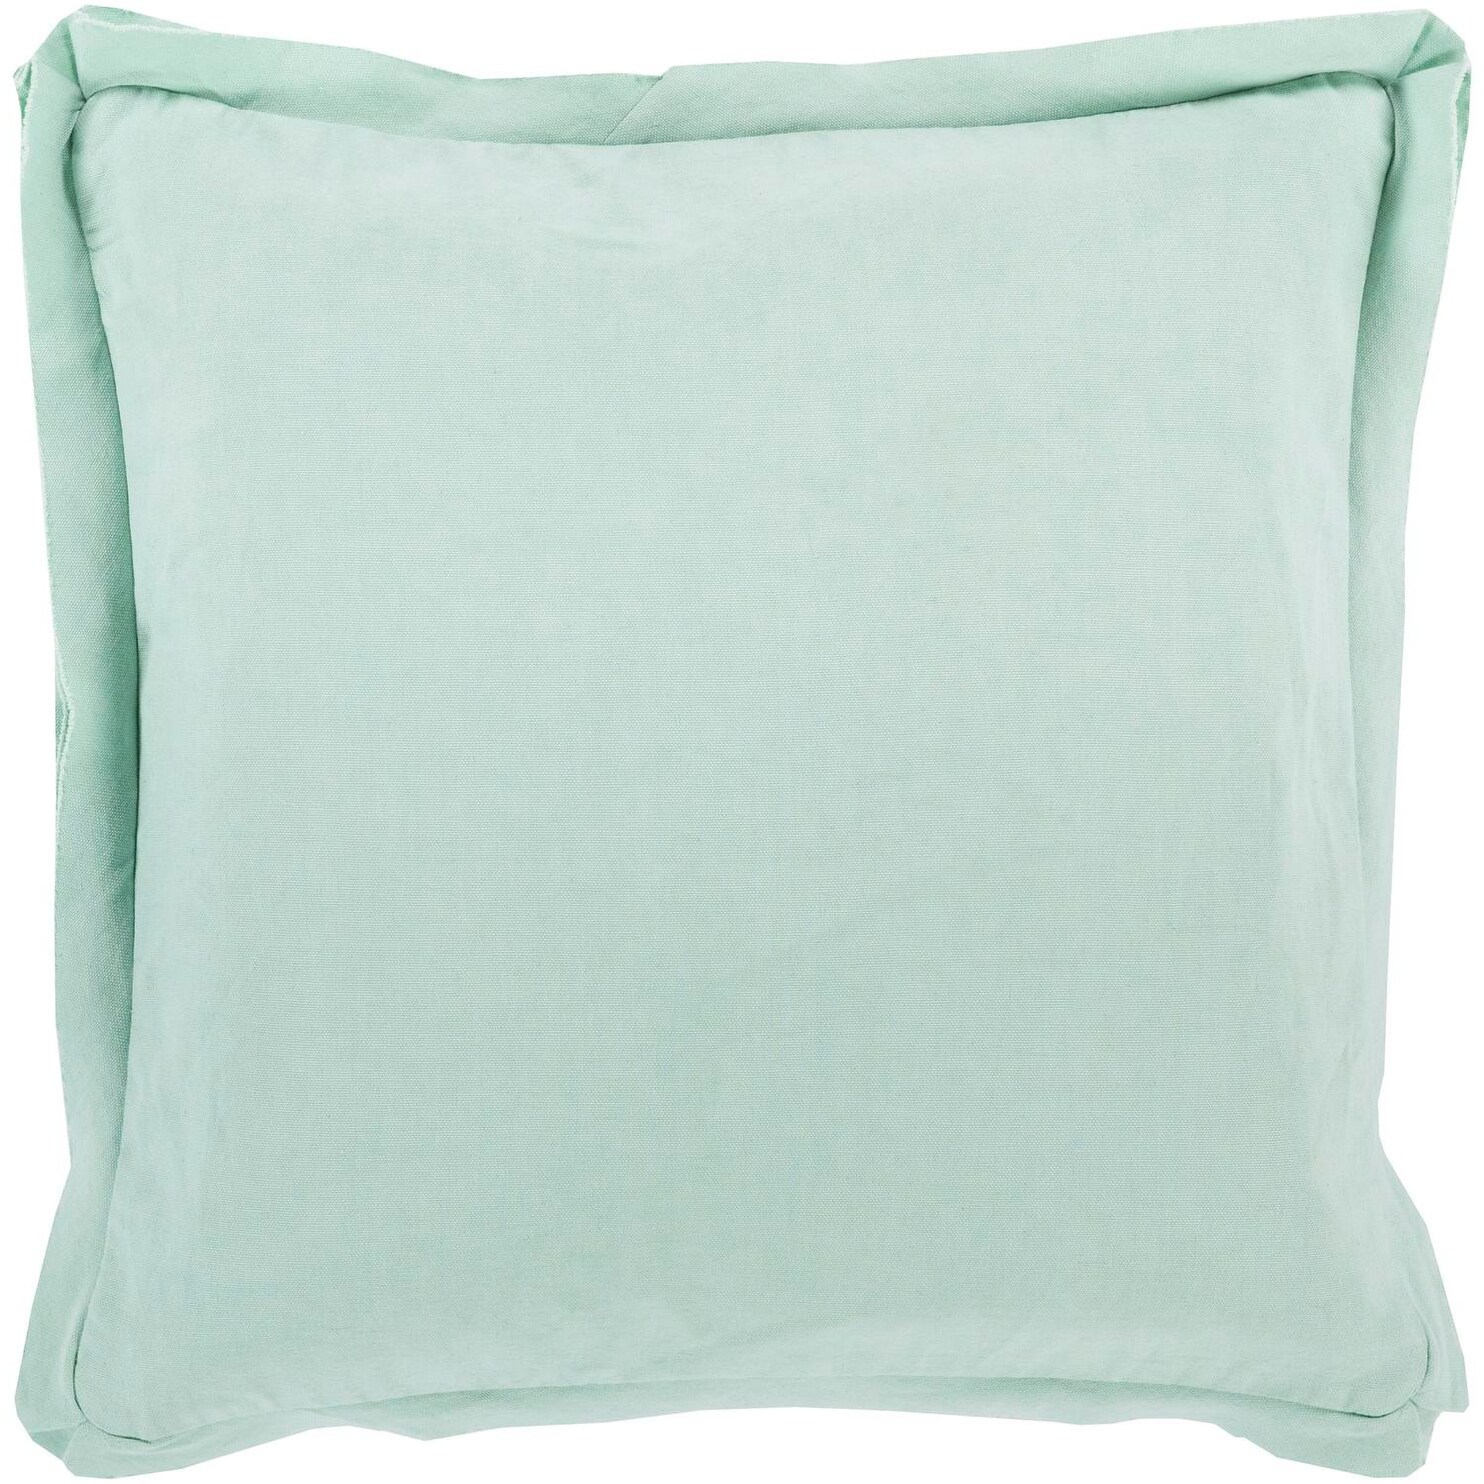 seafoam green decorative pillows